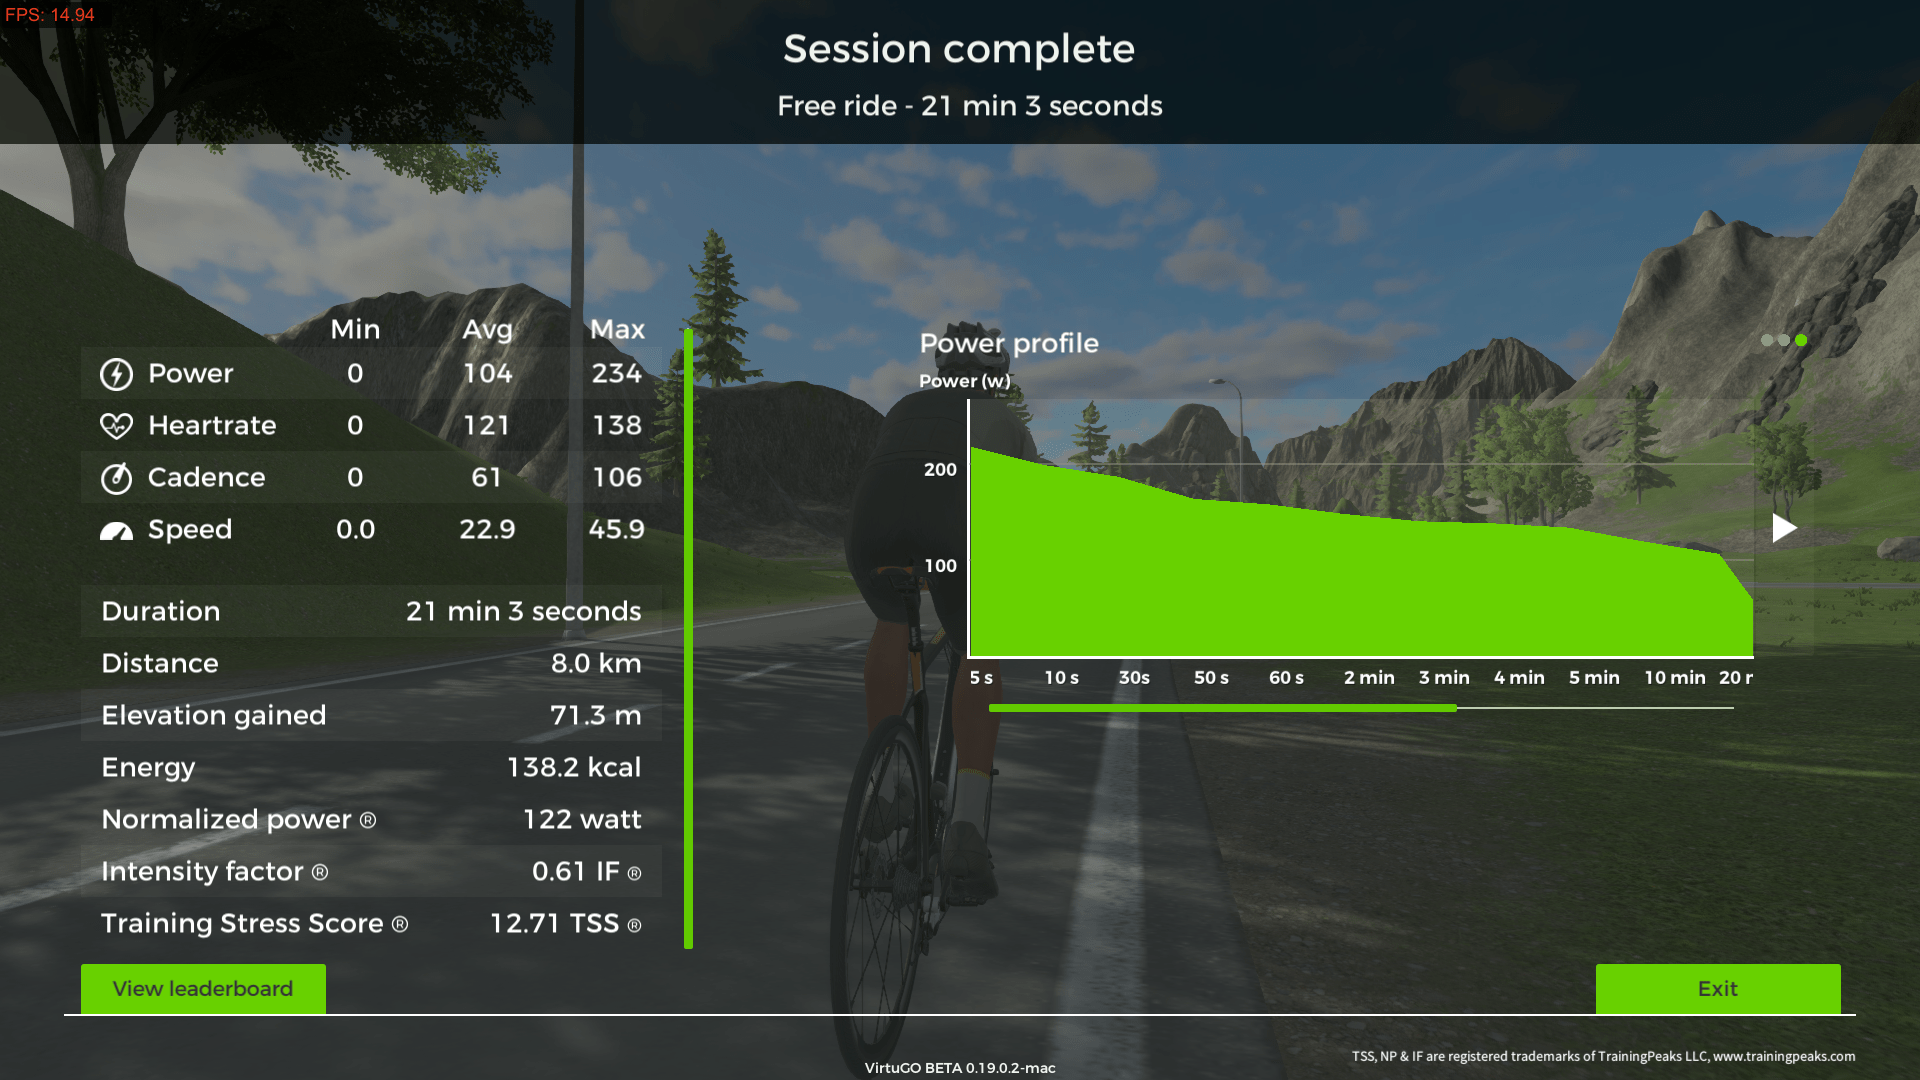 VirtuGO Beta - Free ride session completion statistics (Power Profile)